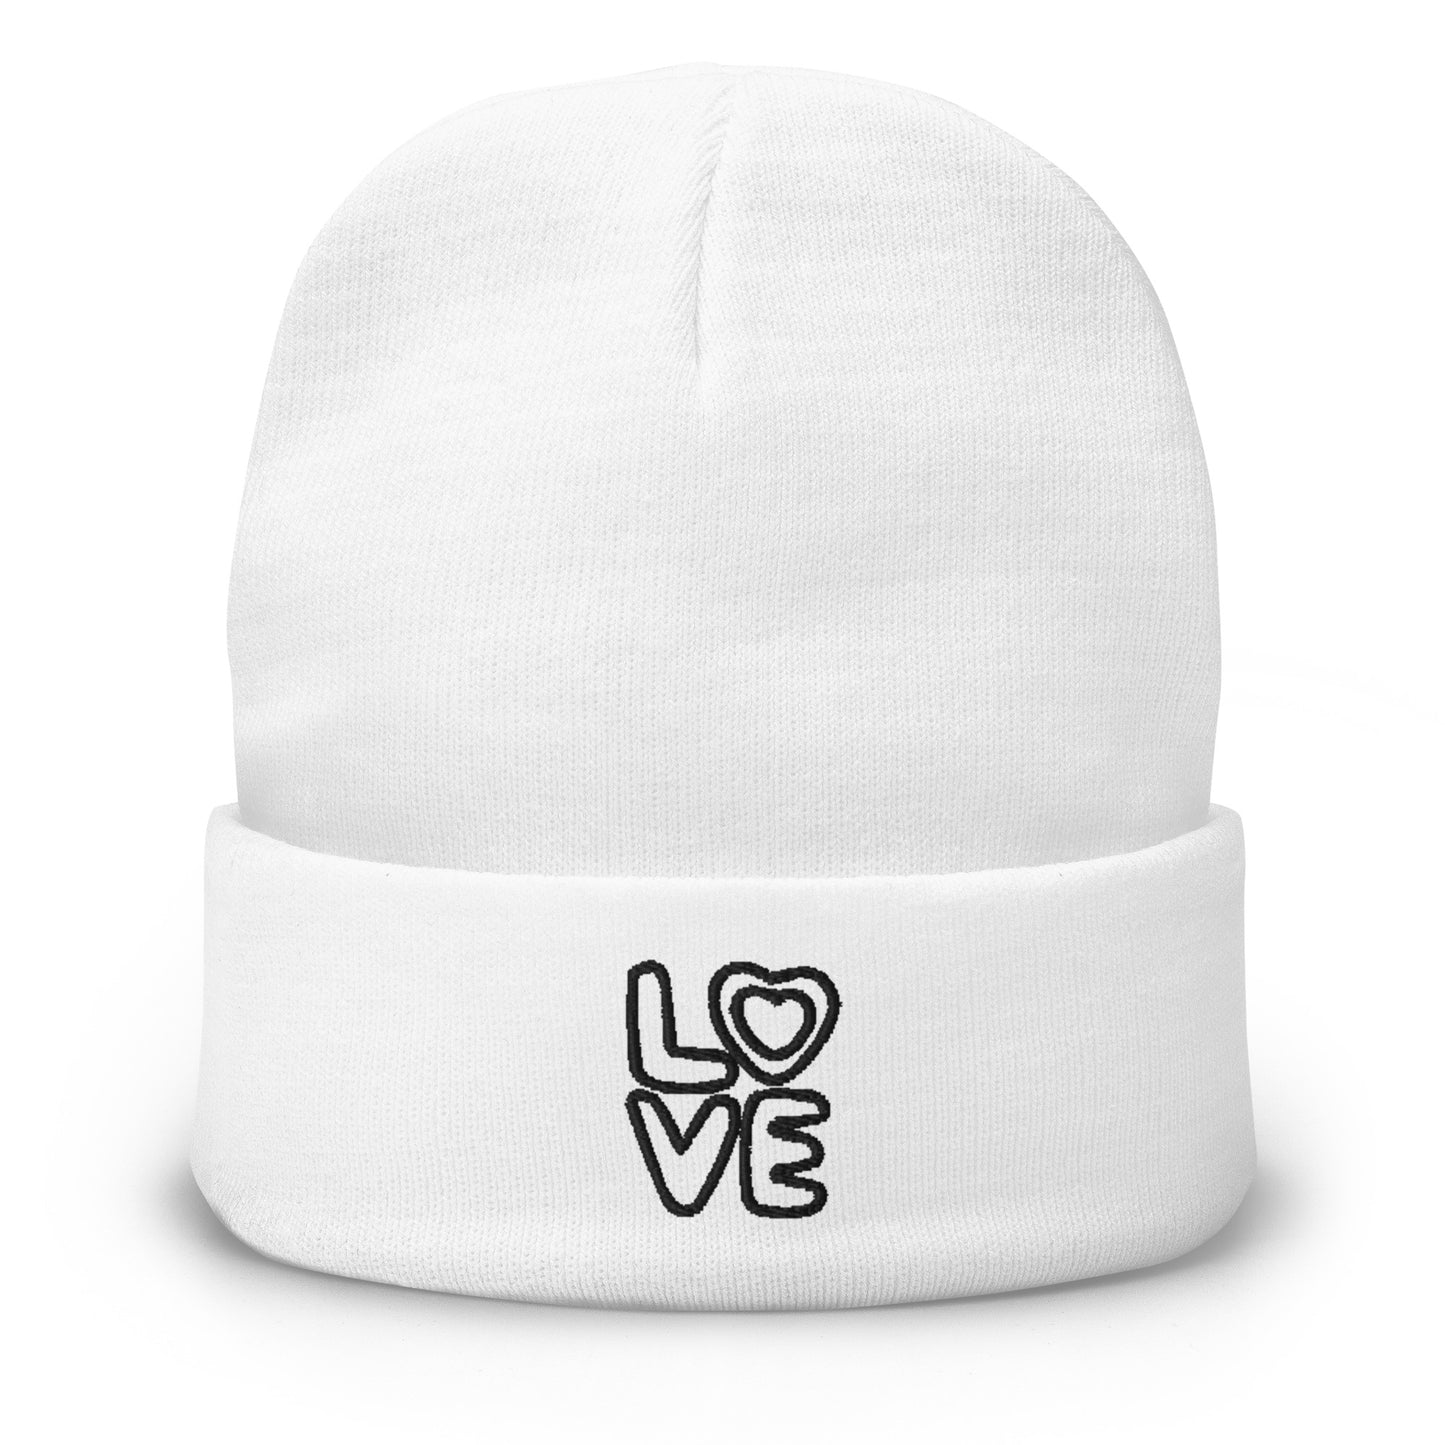 White Beanie Embroidered LOVE